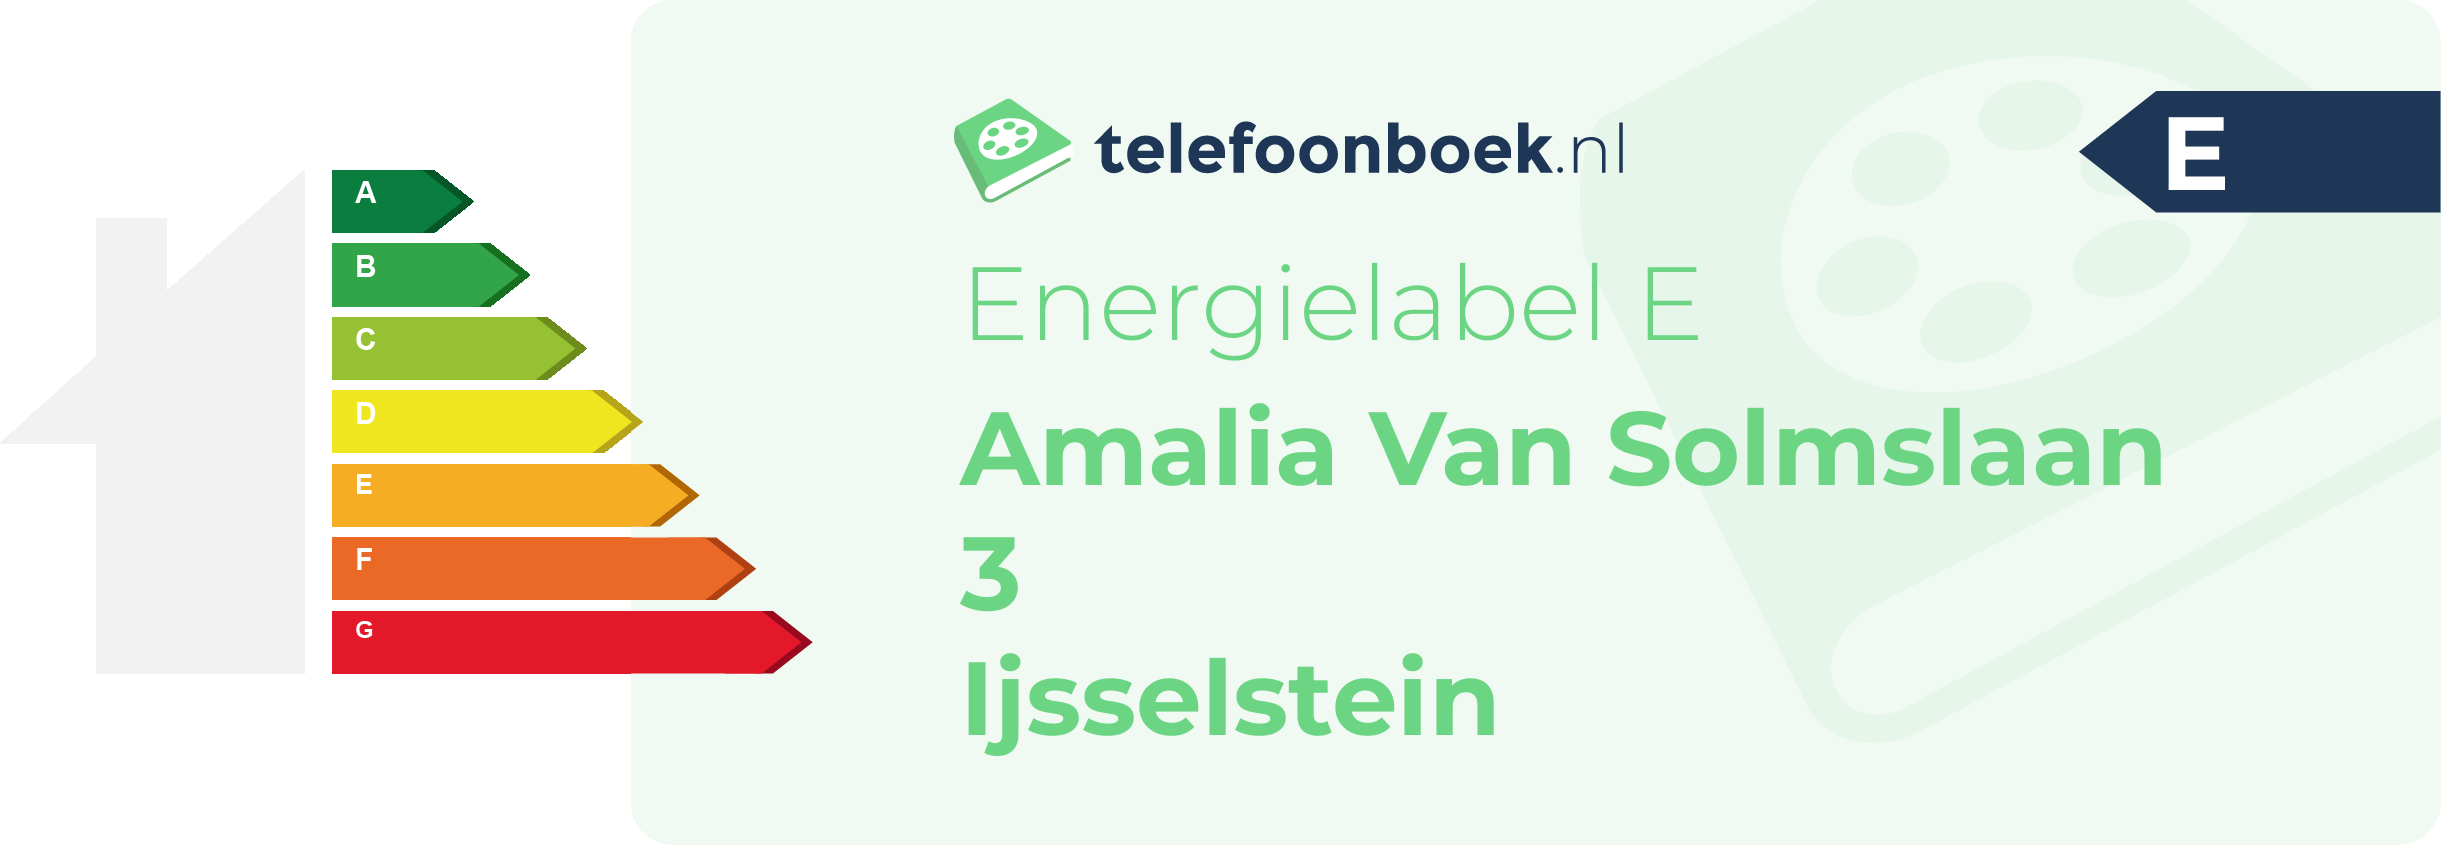 Energielabel Amalia Van Solmslaan 3 Ijsselstein